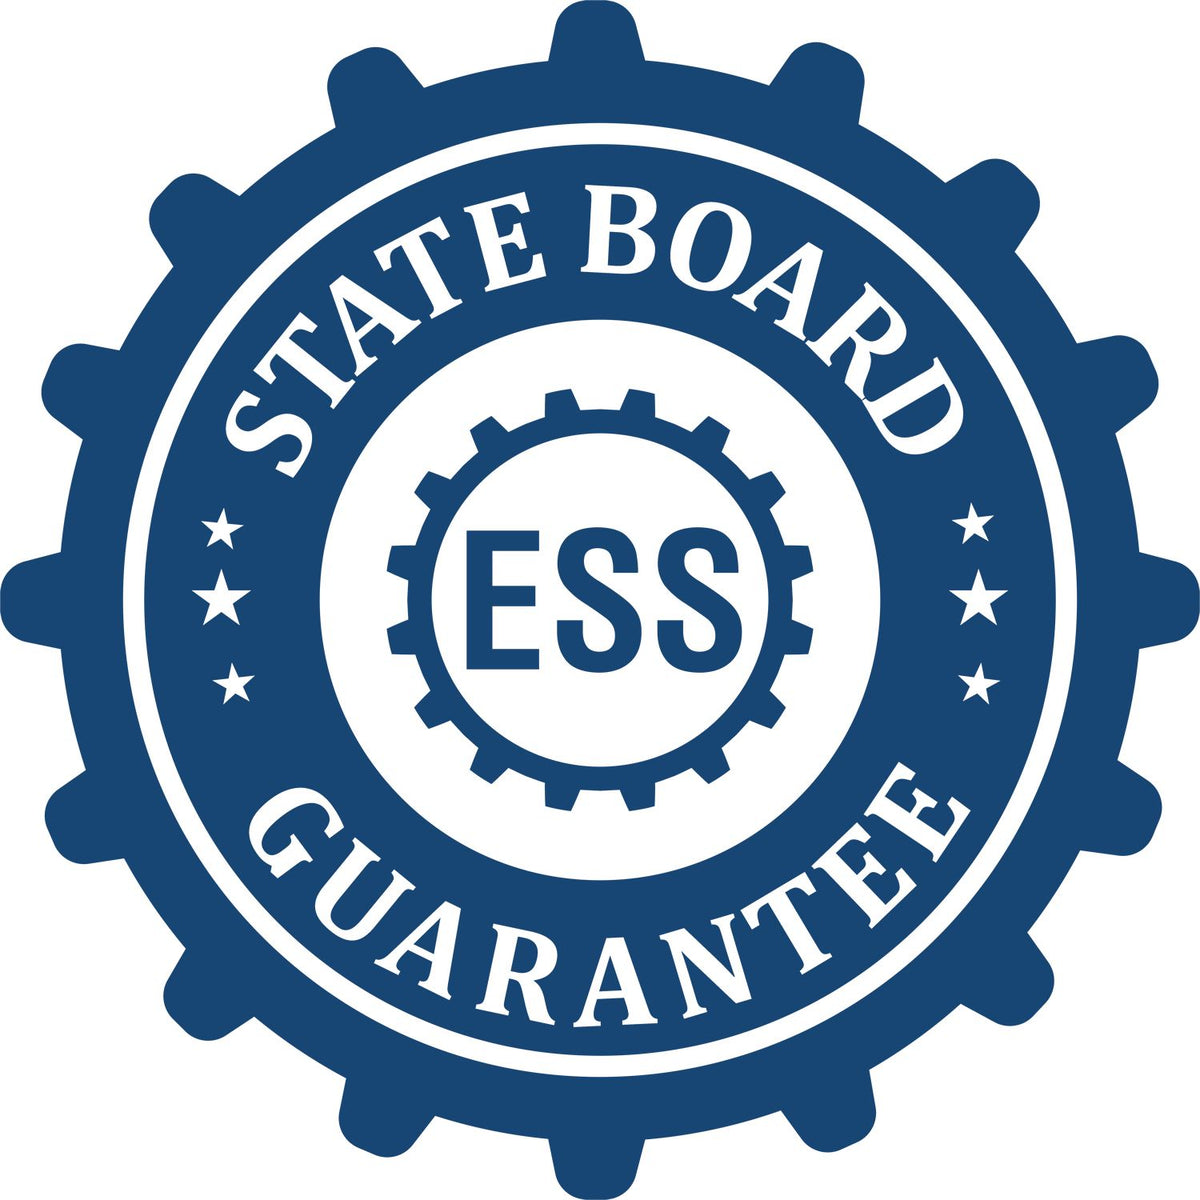 An emblem in a gear shape illustrating a state board guarantee for the Nebraska Geologist Desk Seal